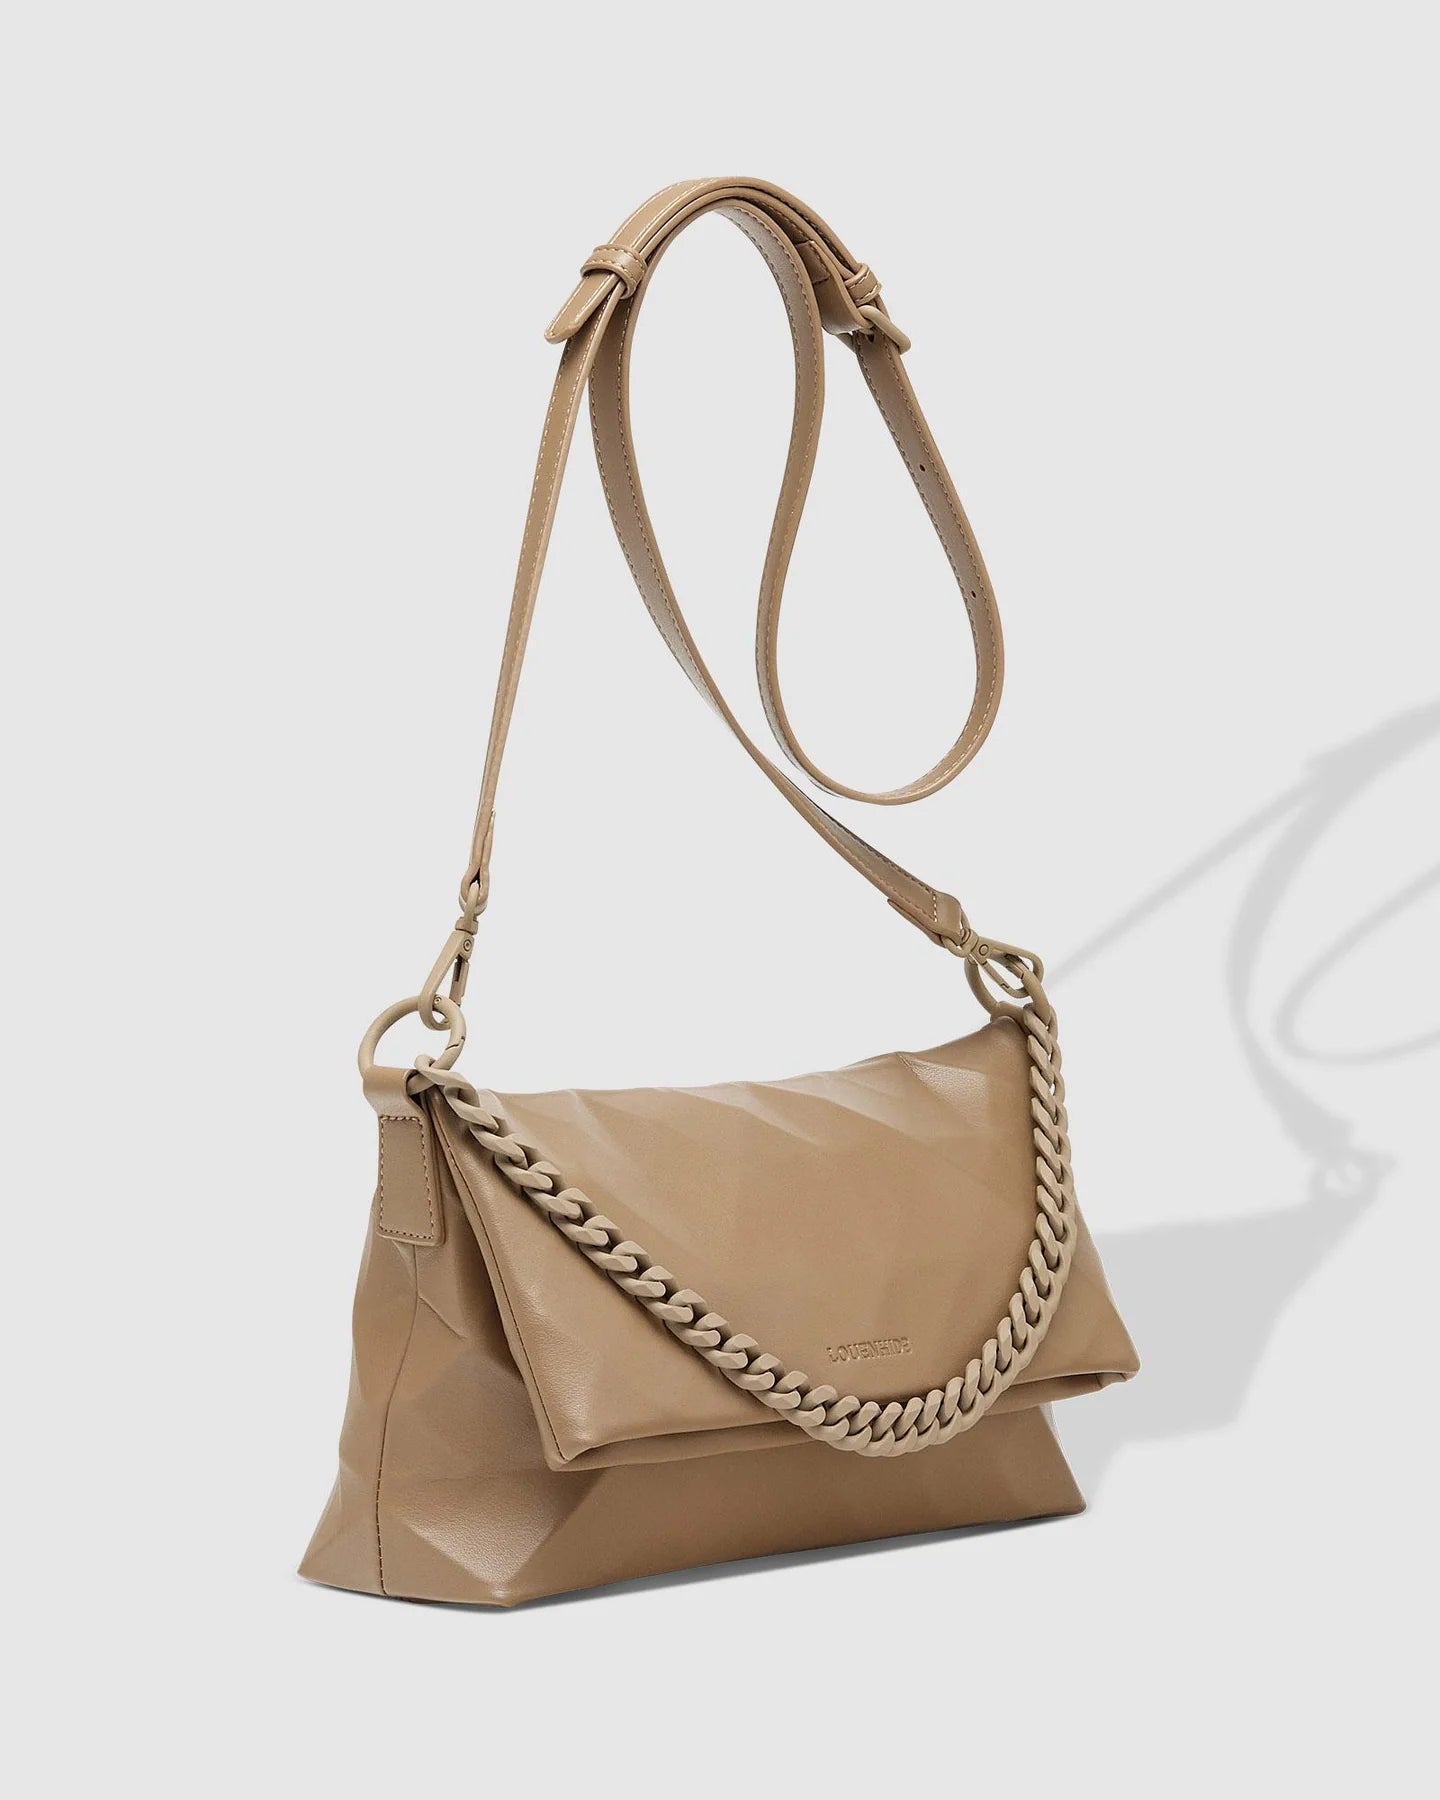 MARLEY SHOULDER BAG - LOUENHIDE - handbags - Stomp Shoes Darwin